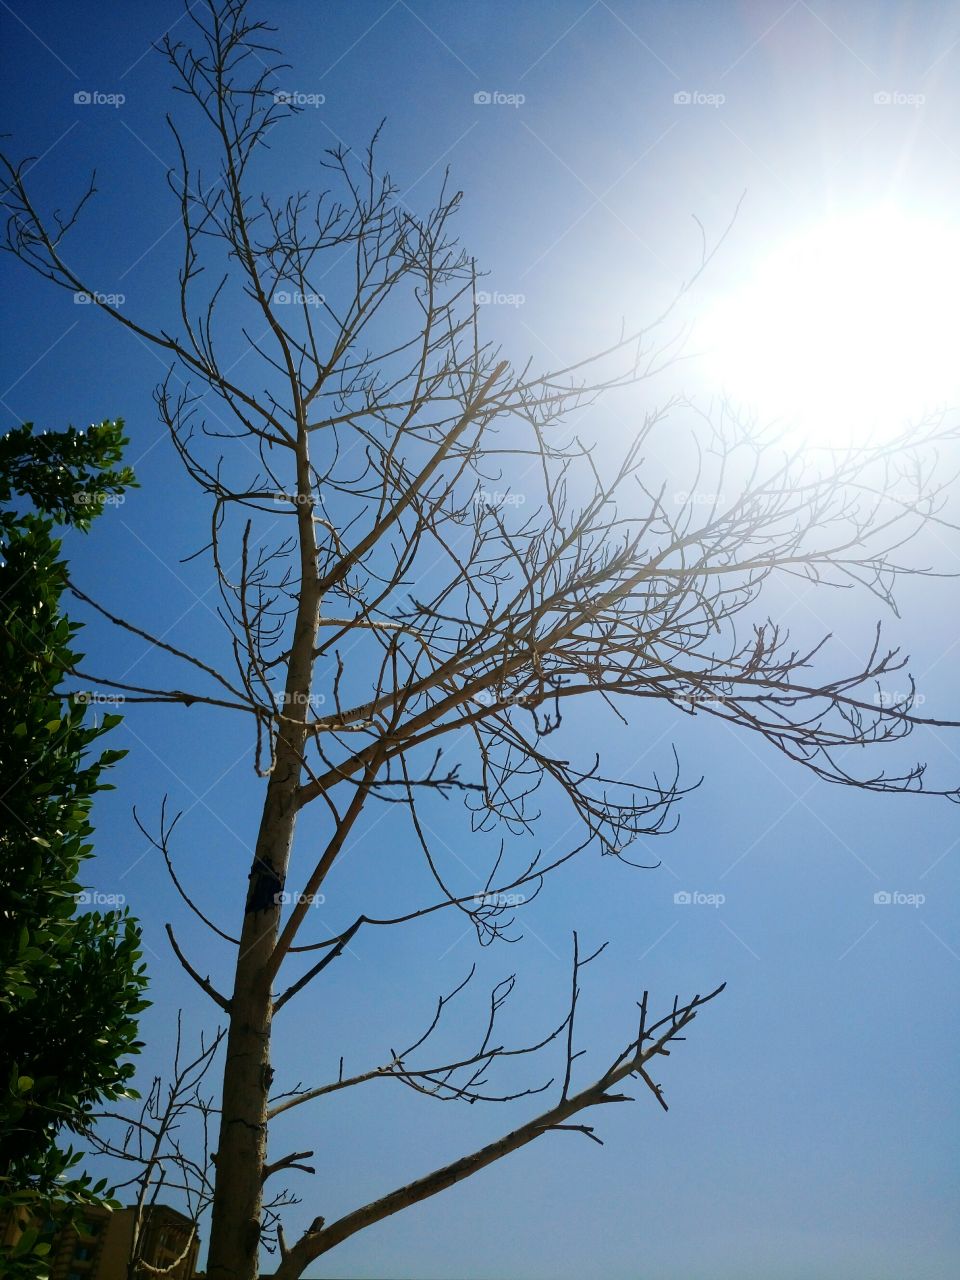 it's sunshine, tree